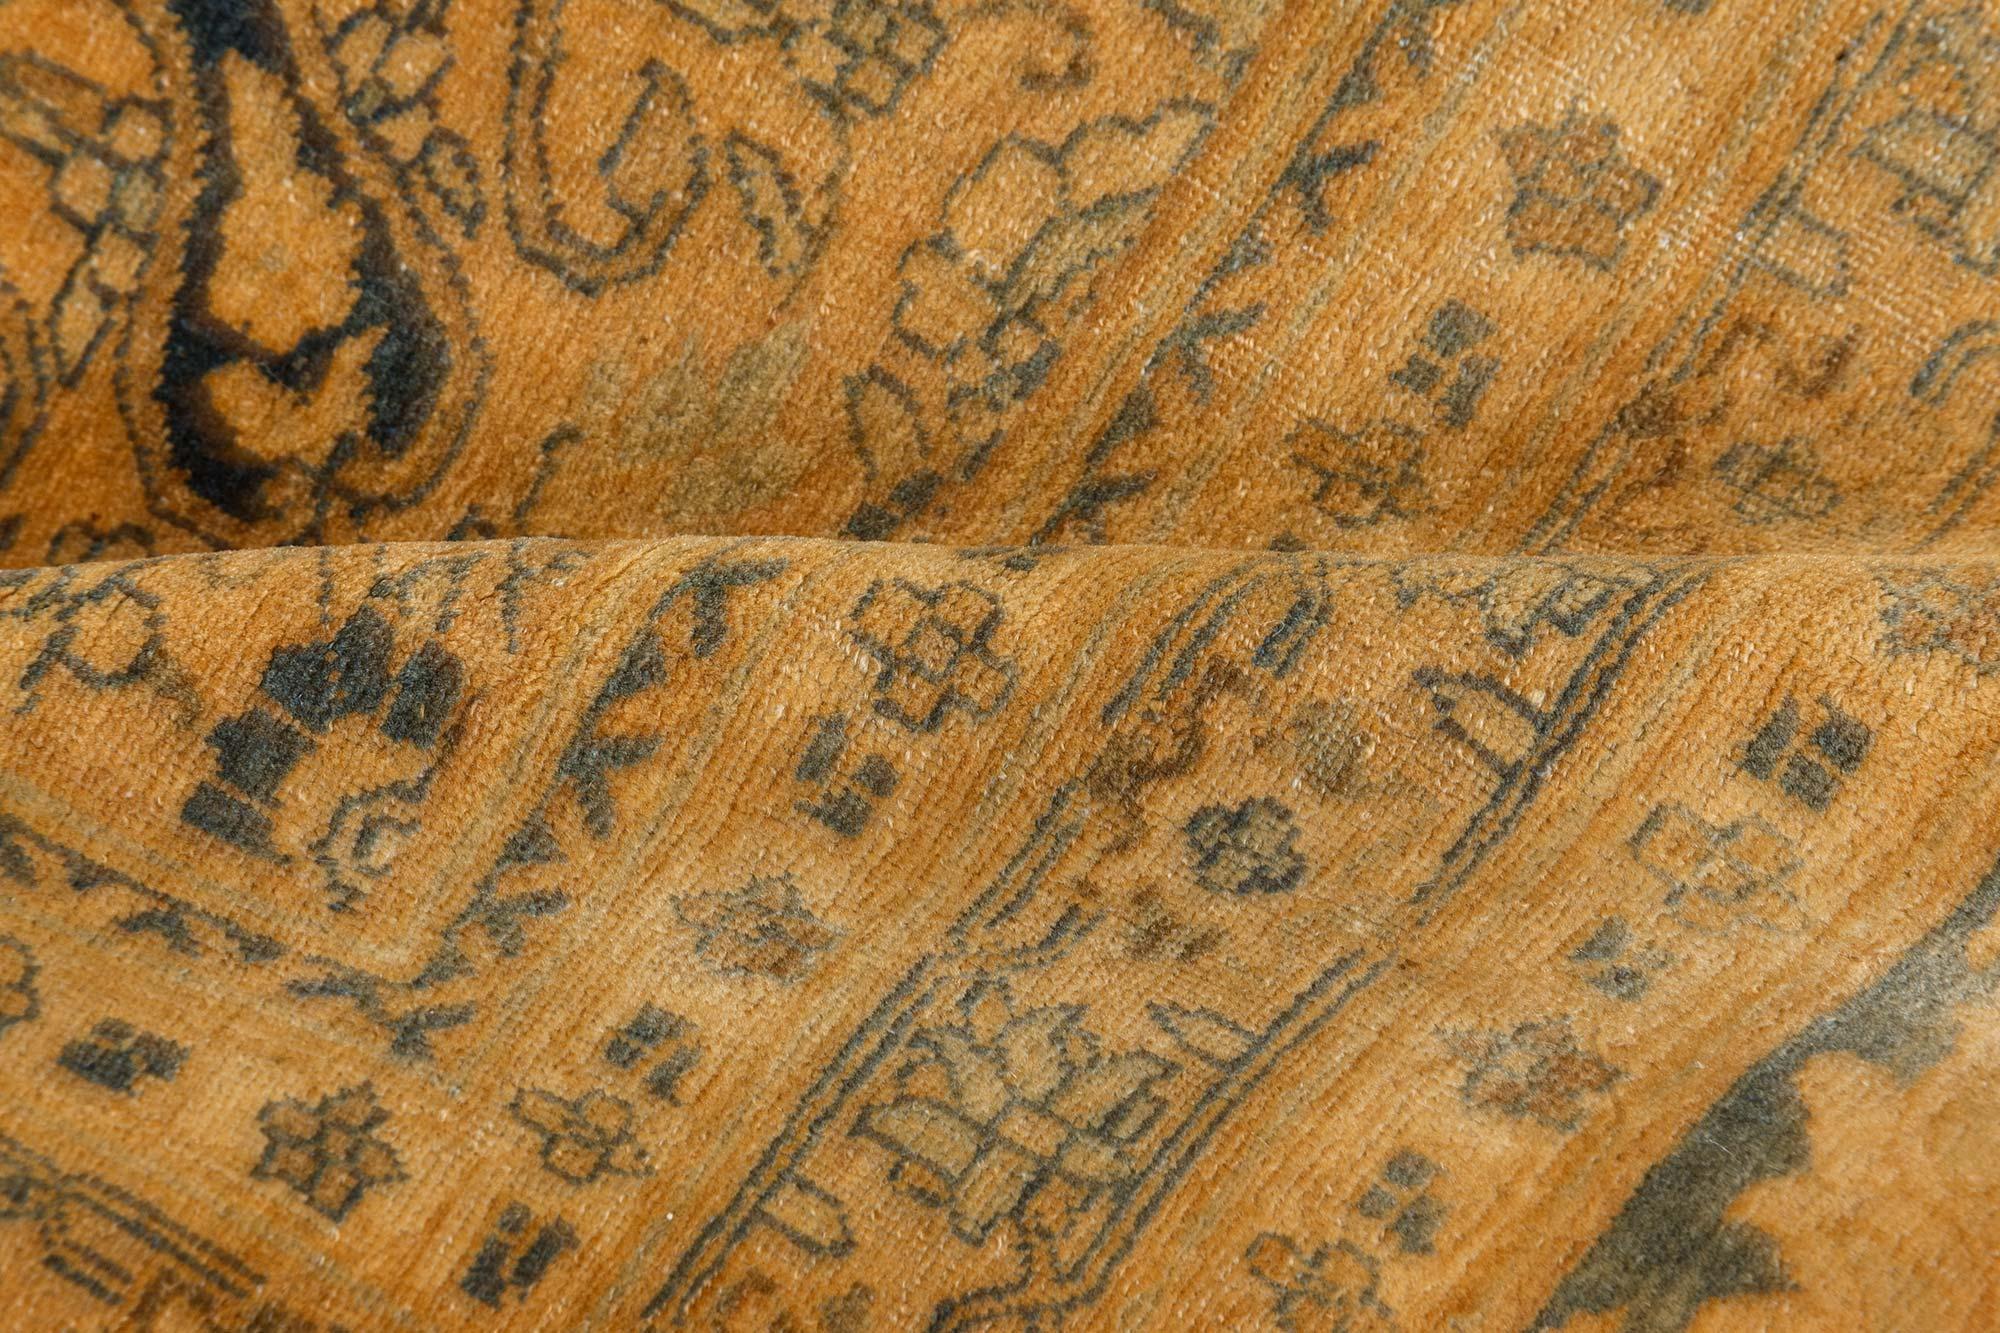 Authentic 1900s Persian Tabriz yellow handmade wool carpet
Size: 13'4